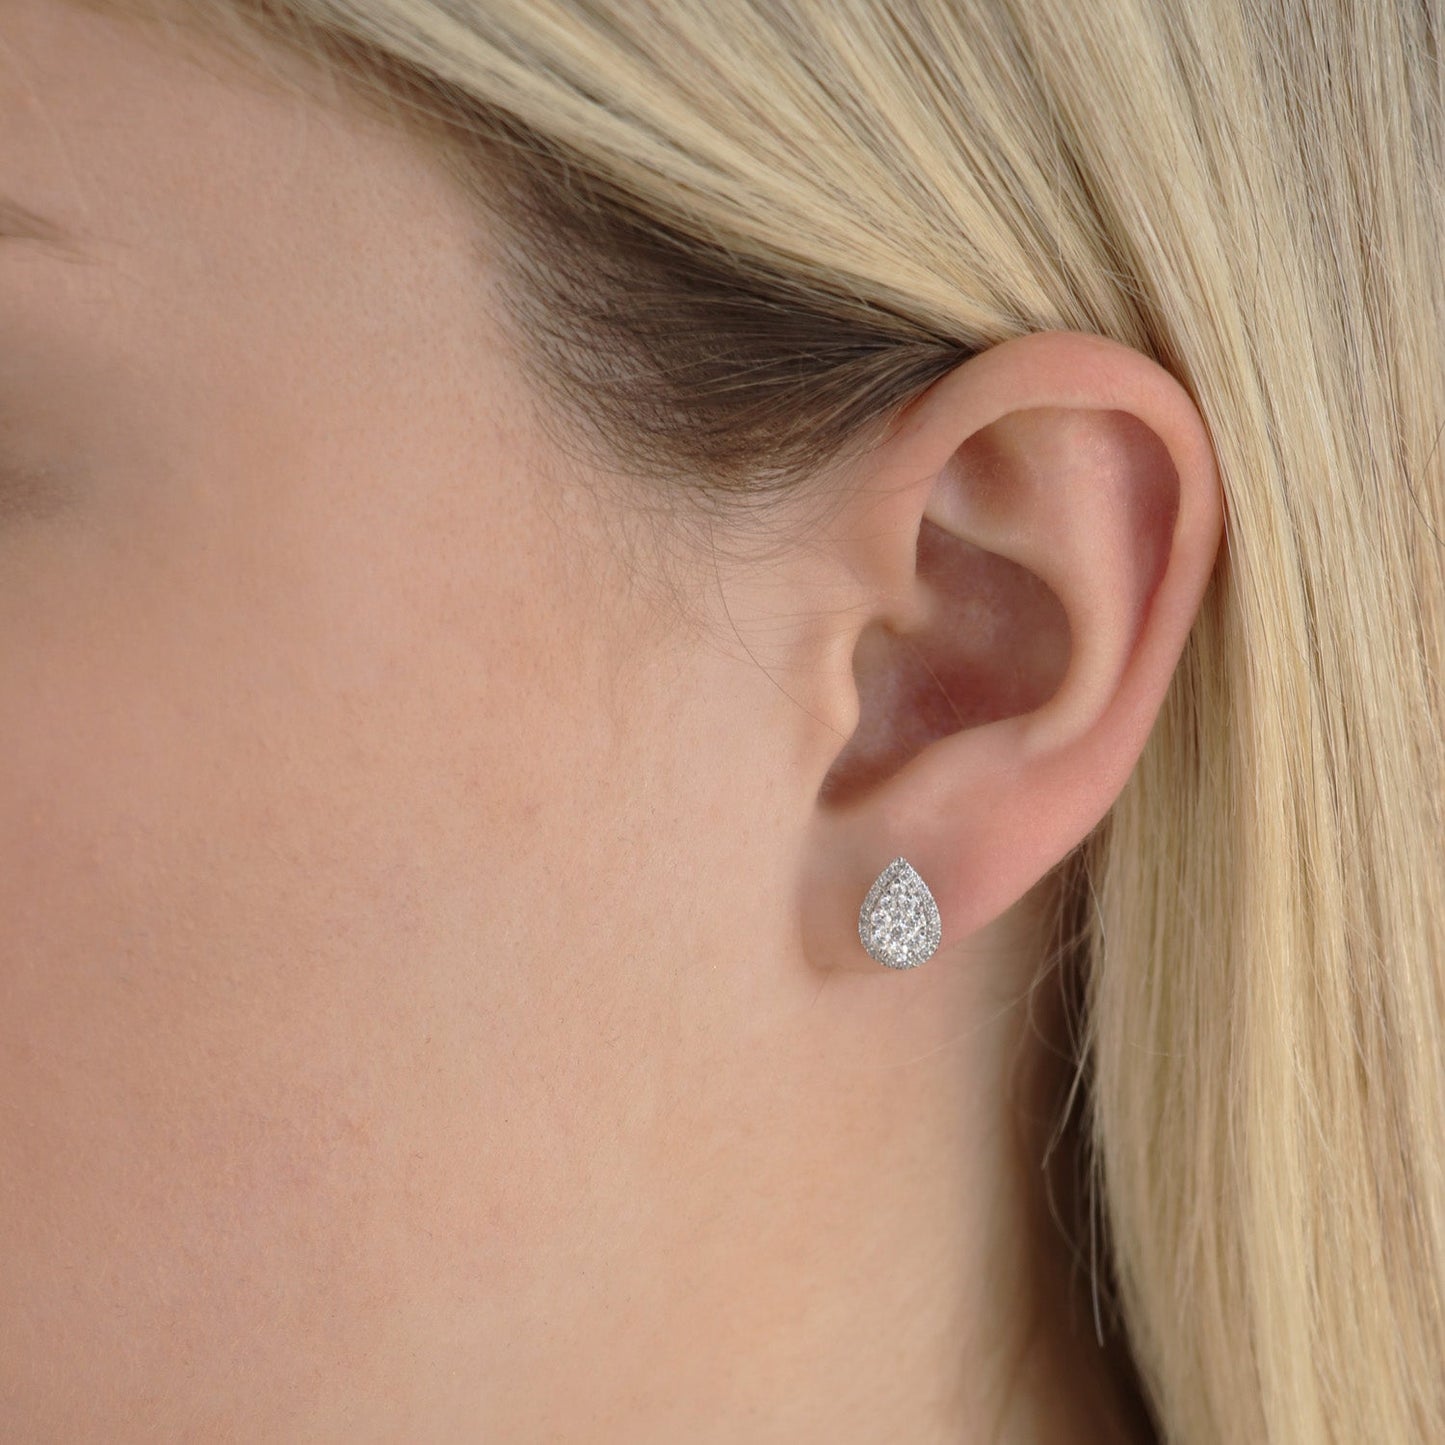 Diamond Pear Stud Earrings with 0.50ct Diamonds in 18K White Gold - IGE-14494-050-18W